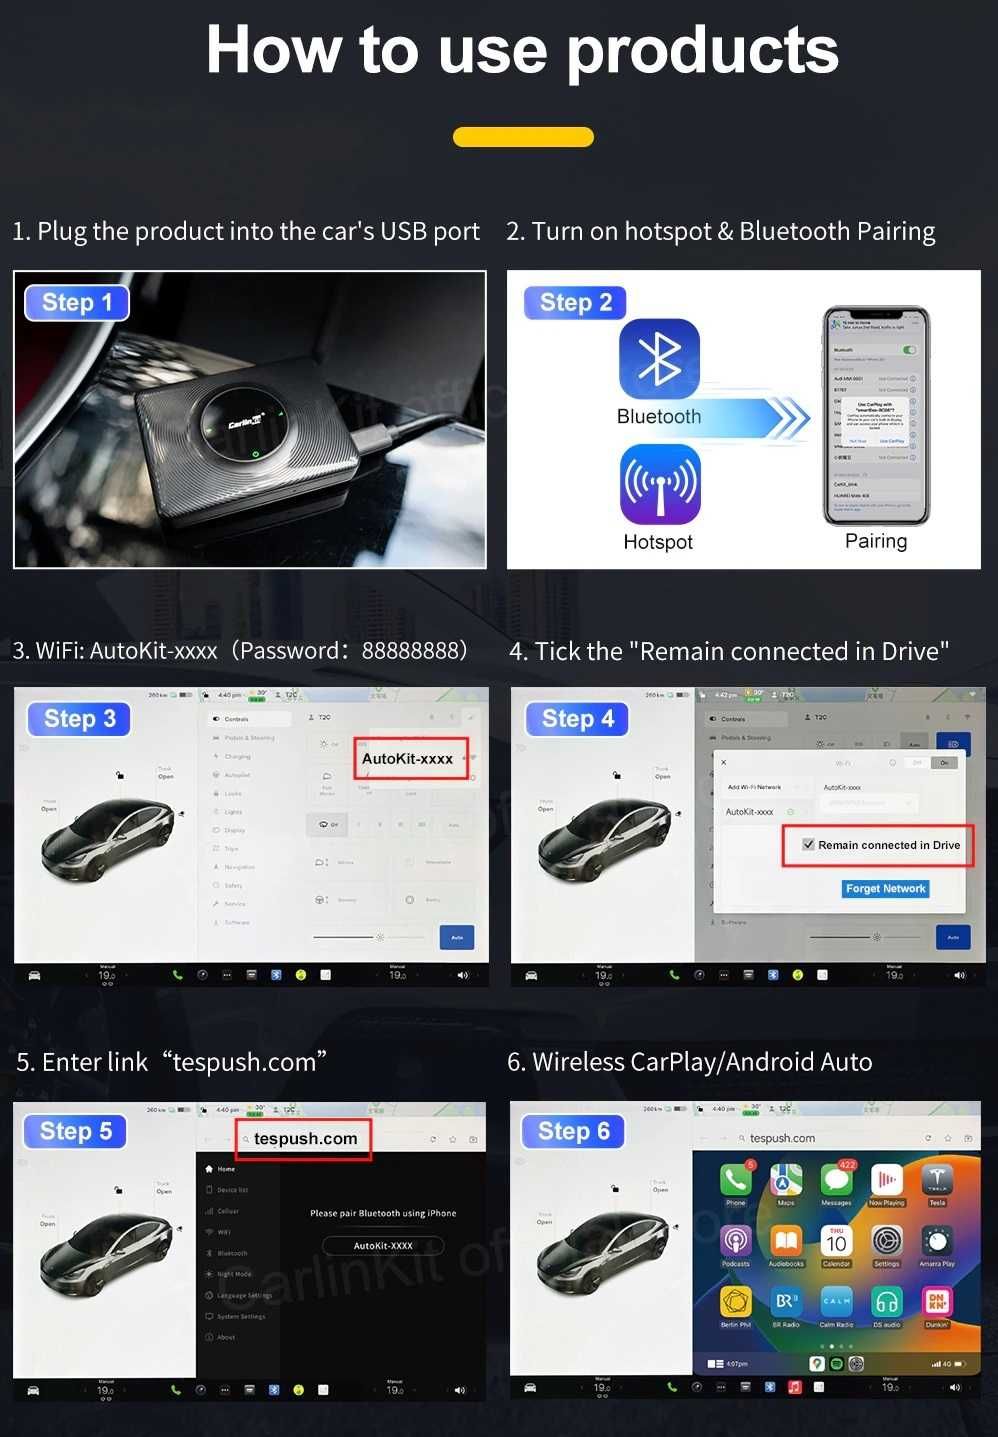 CarlinKit T2C for Tesla  - беспроводной адаптер CarPlay / Android Auto